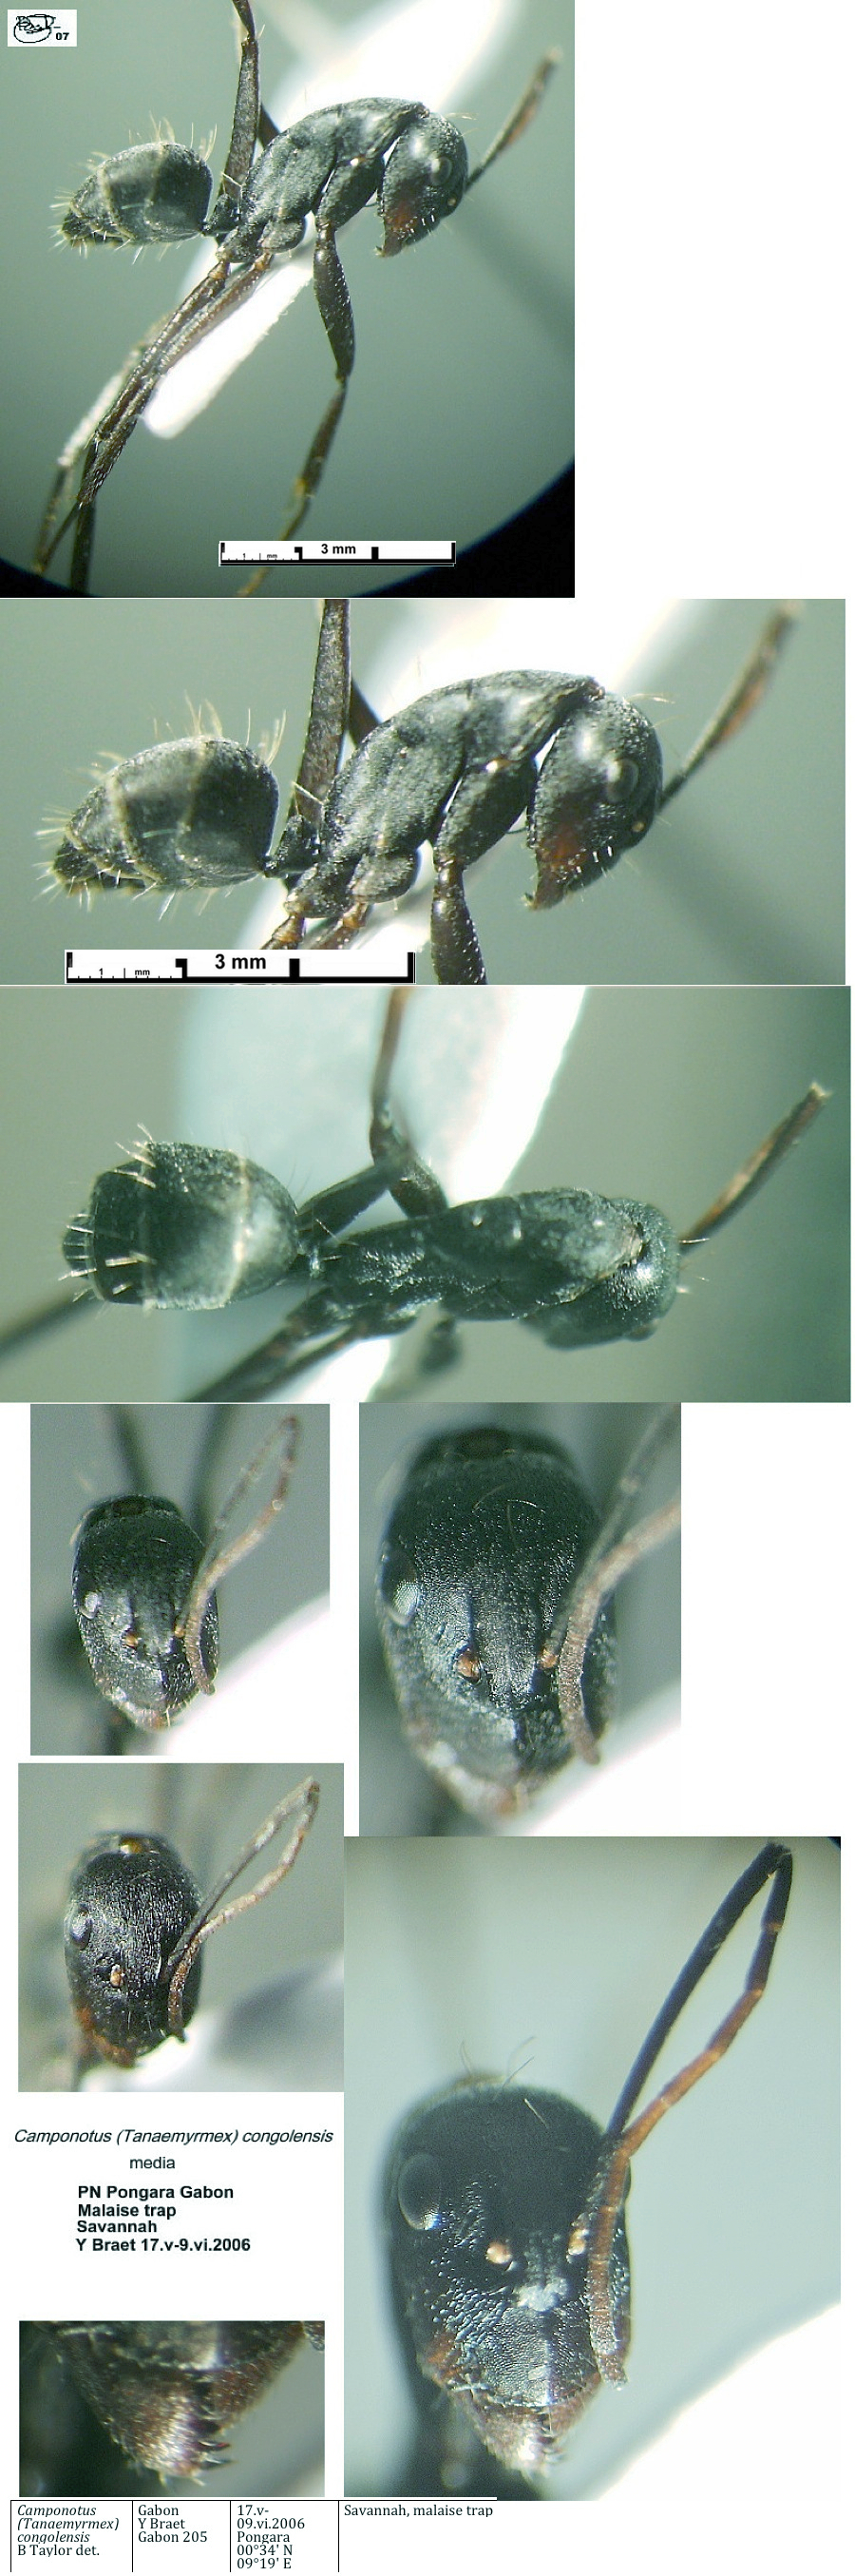 {Camponotus congolensis media}